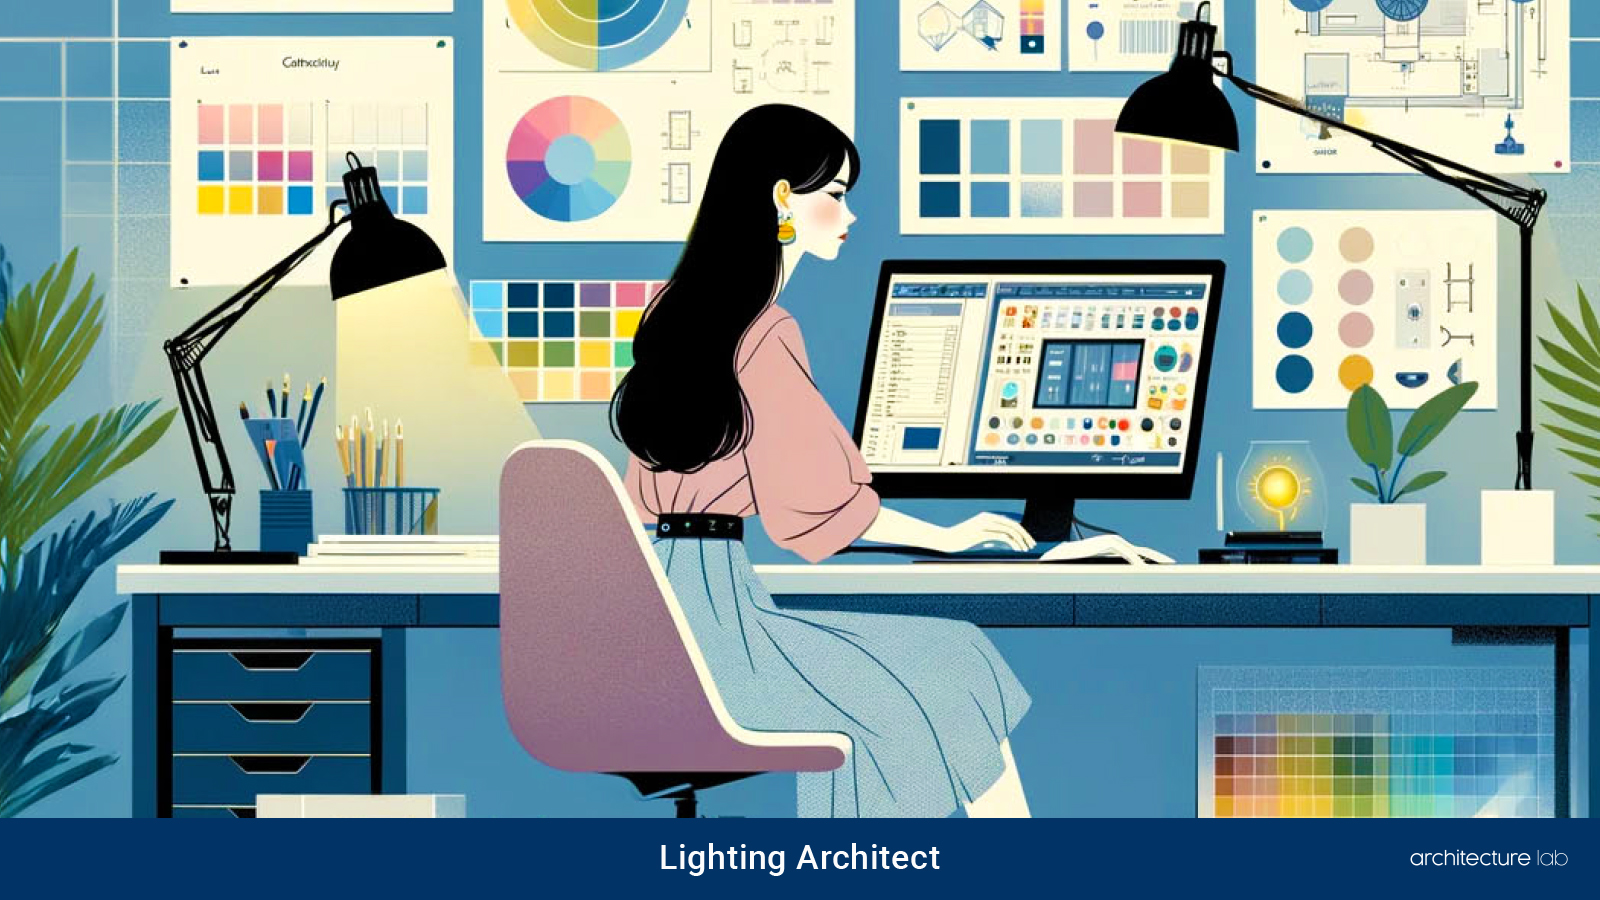 Lighting architect